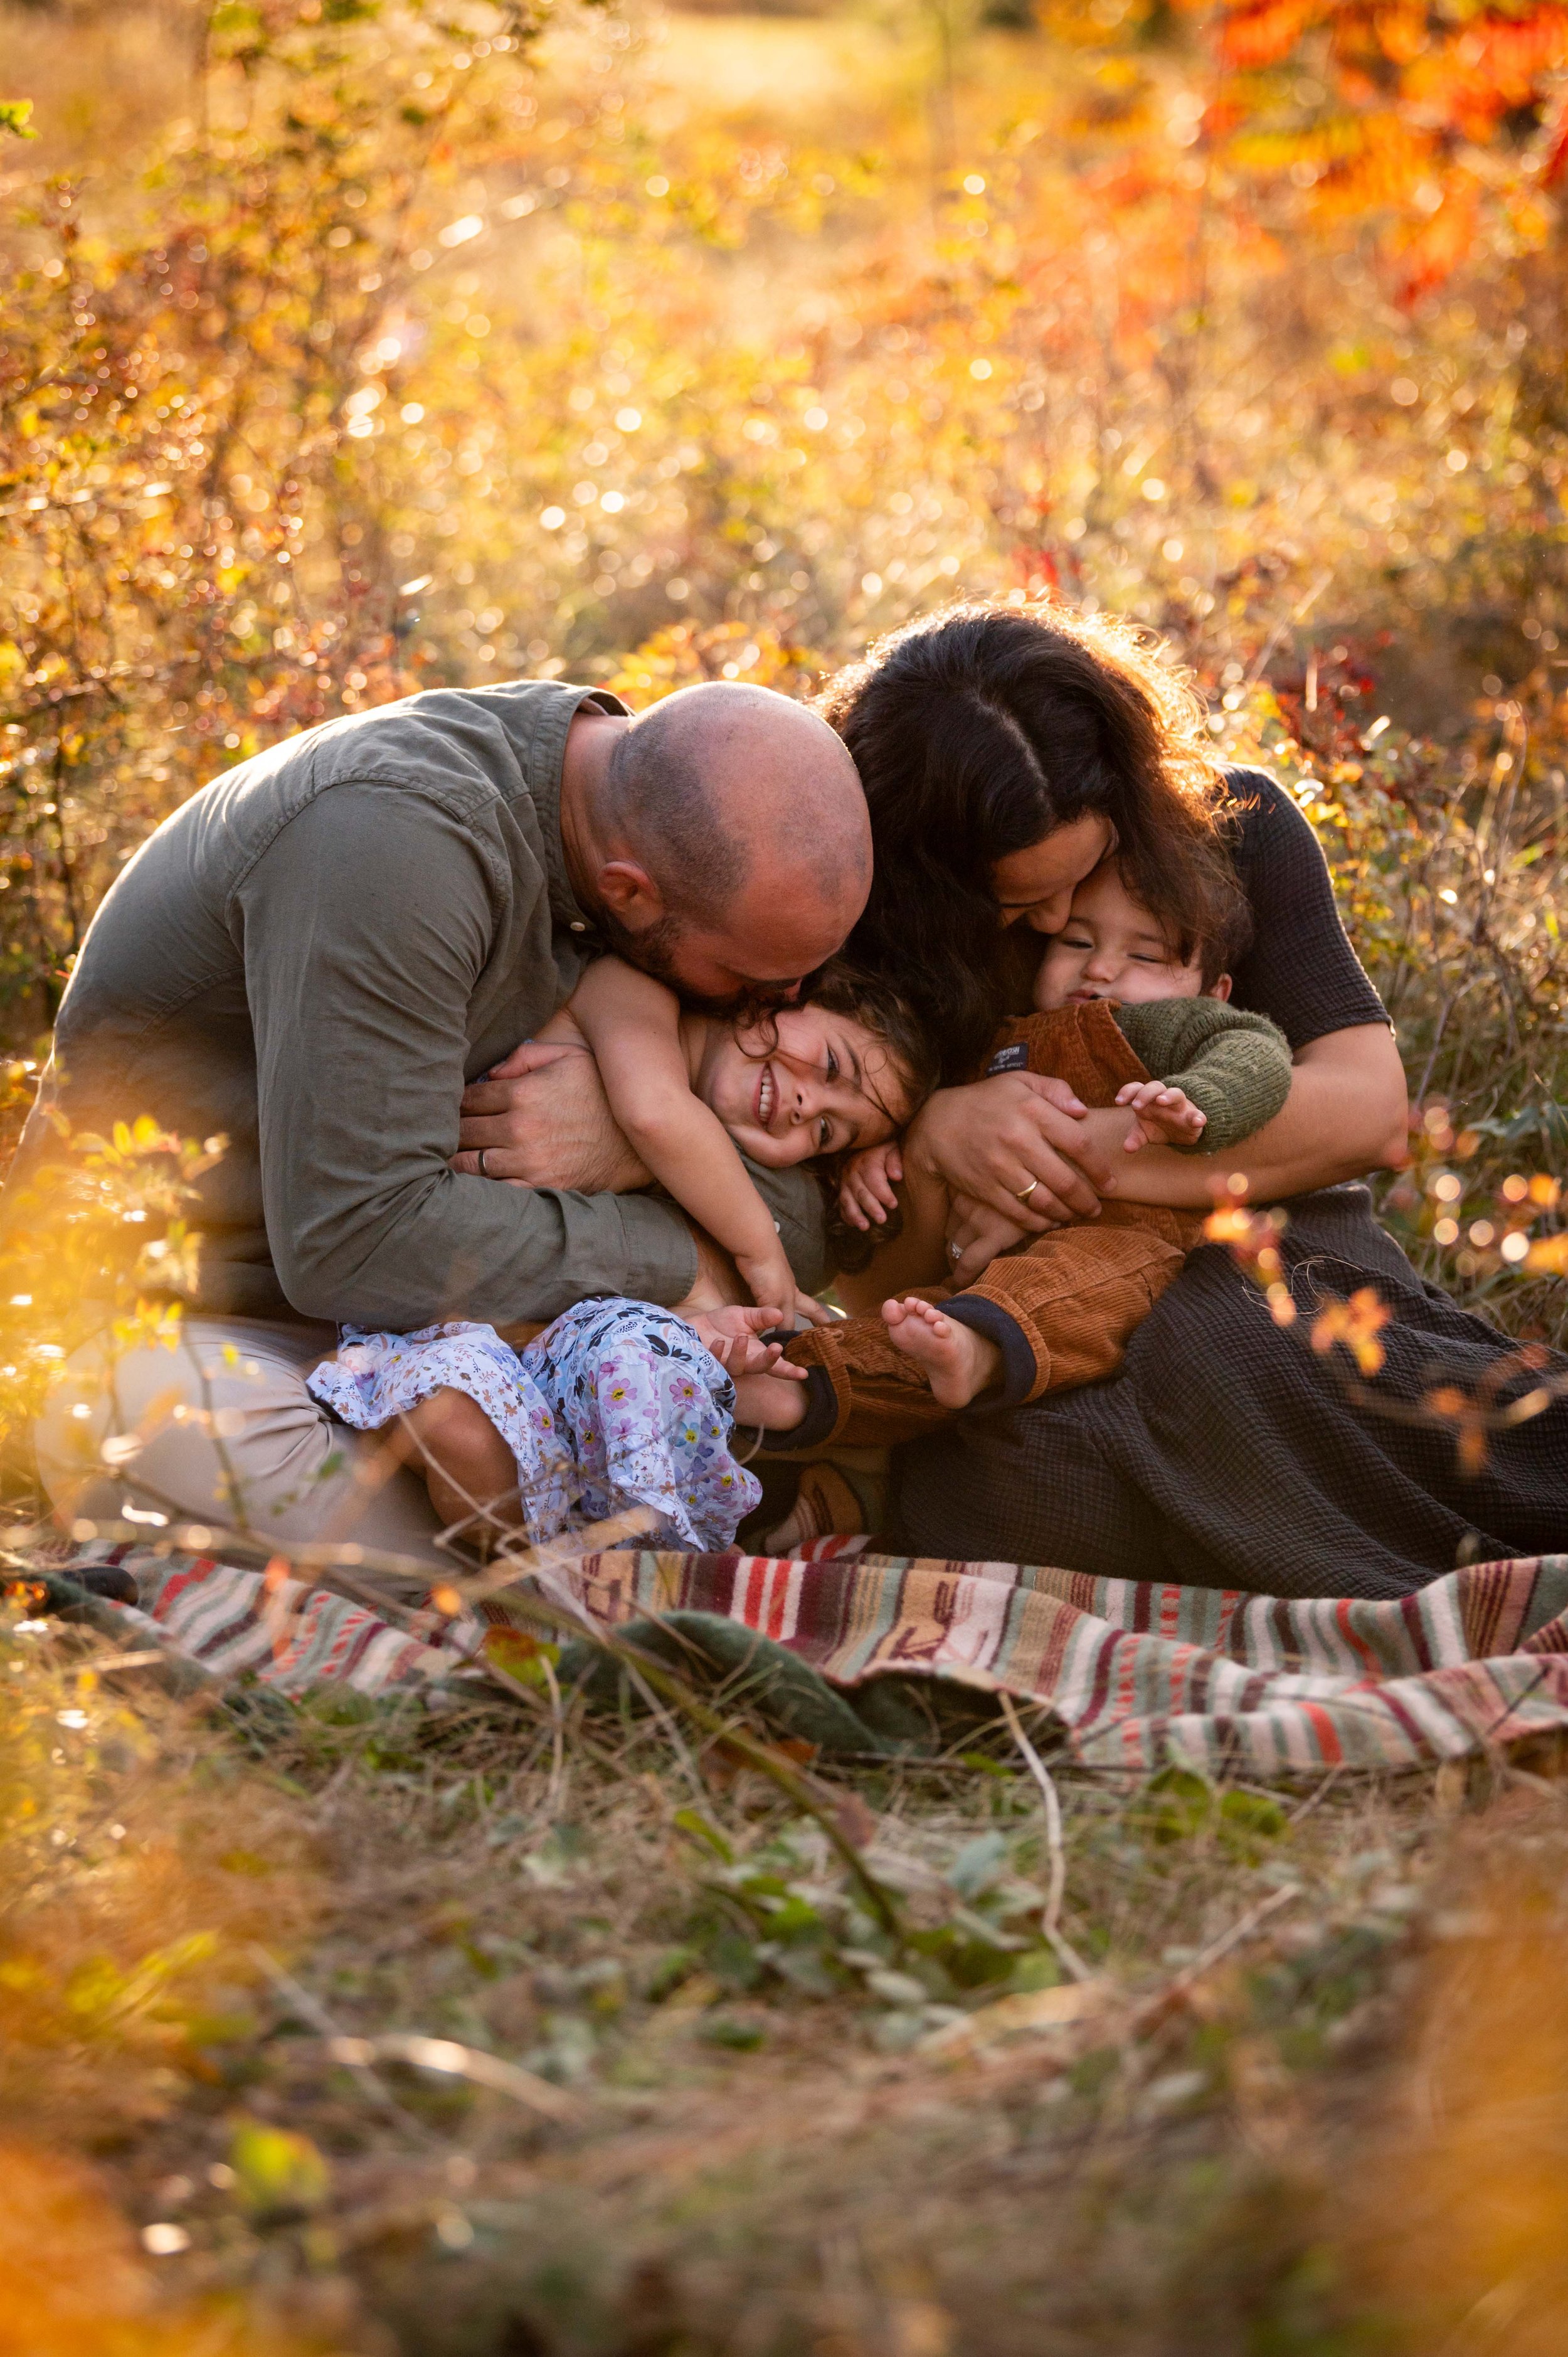 lindsay murphy photography | portland maine family photographer | warm wildlower field family cuddling.jpg